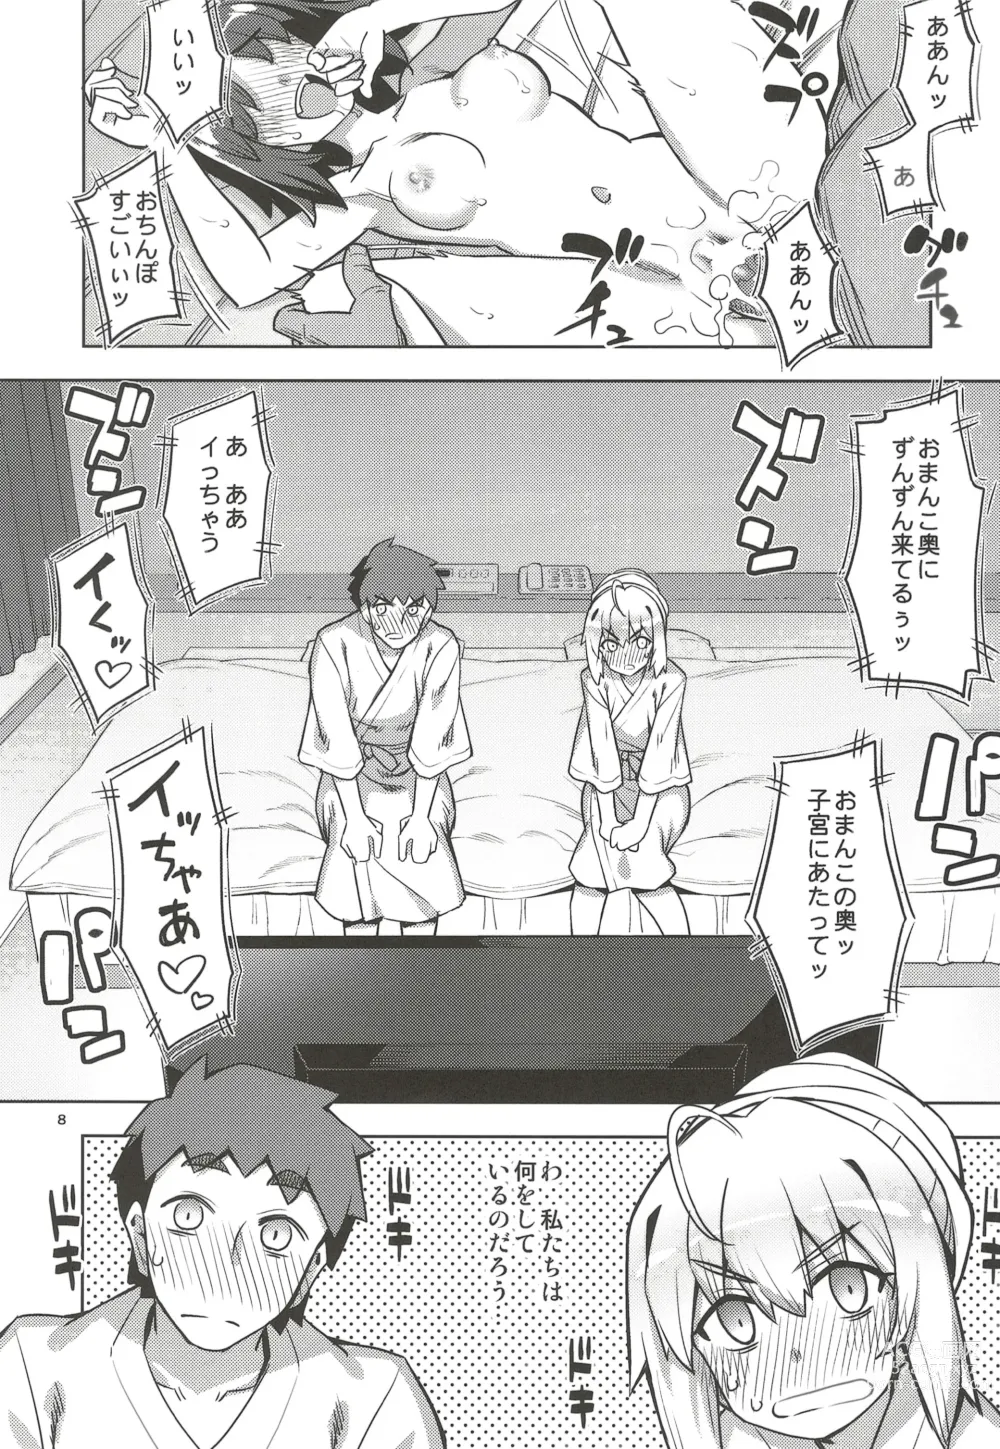 Page 8 of doujinshi RE32